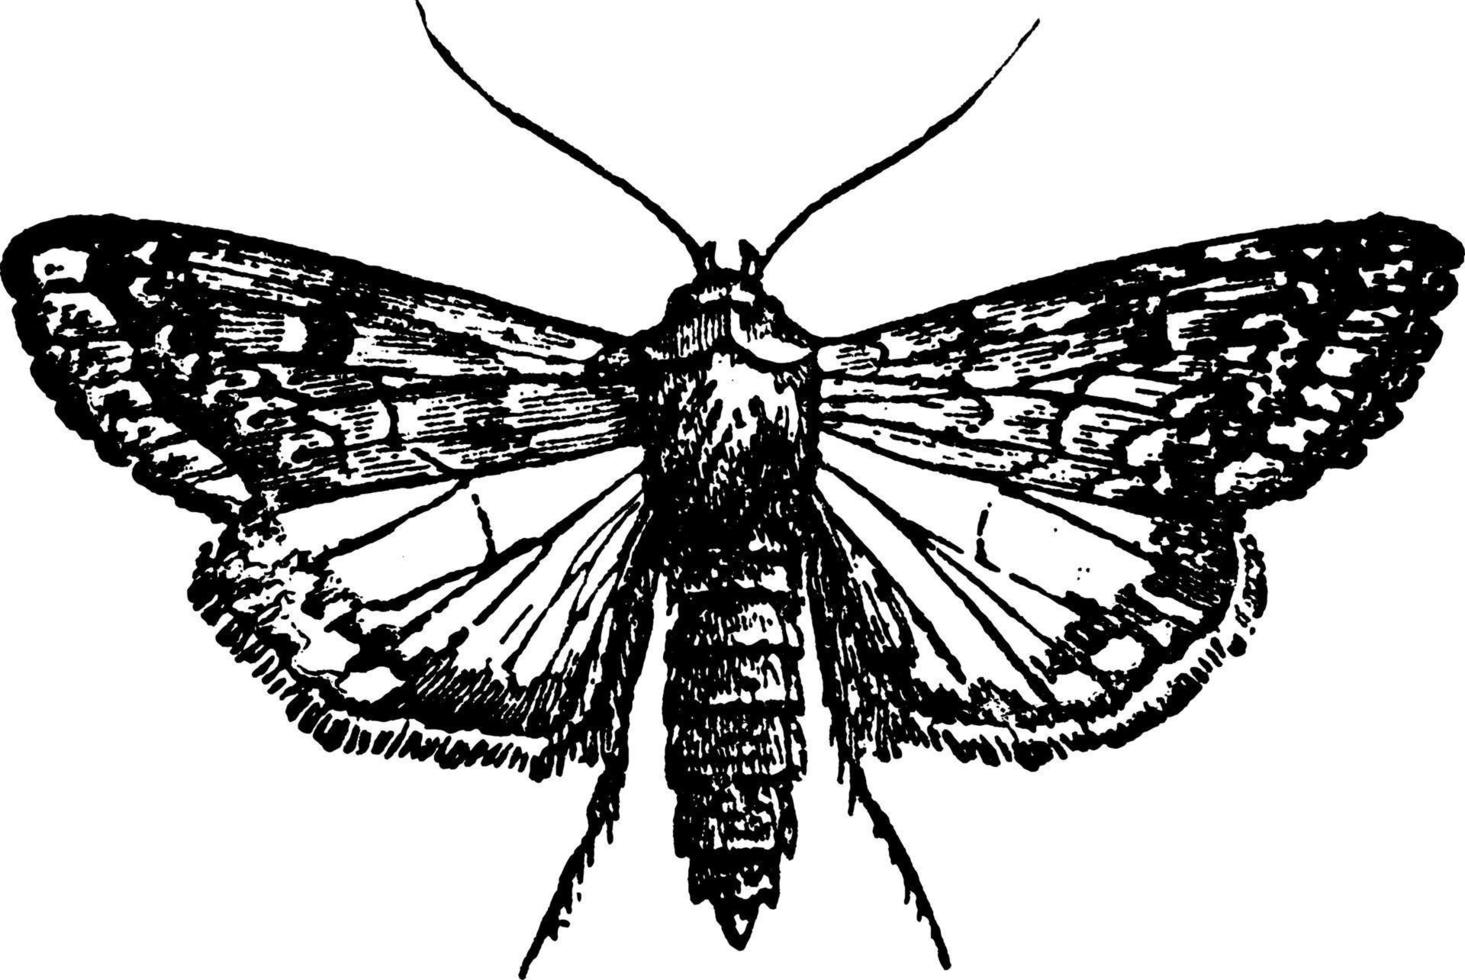 mariposa ou heliothis armiger, ilustração vintage. vetor